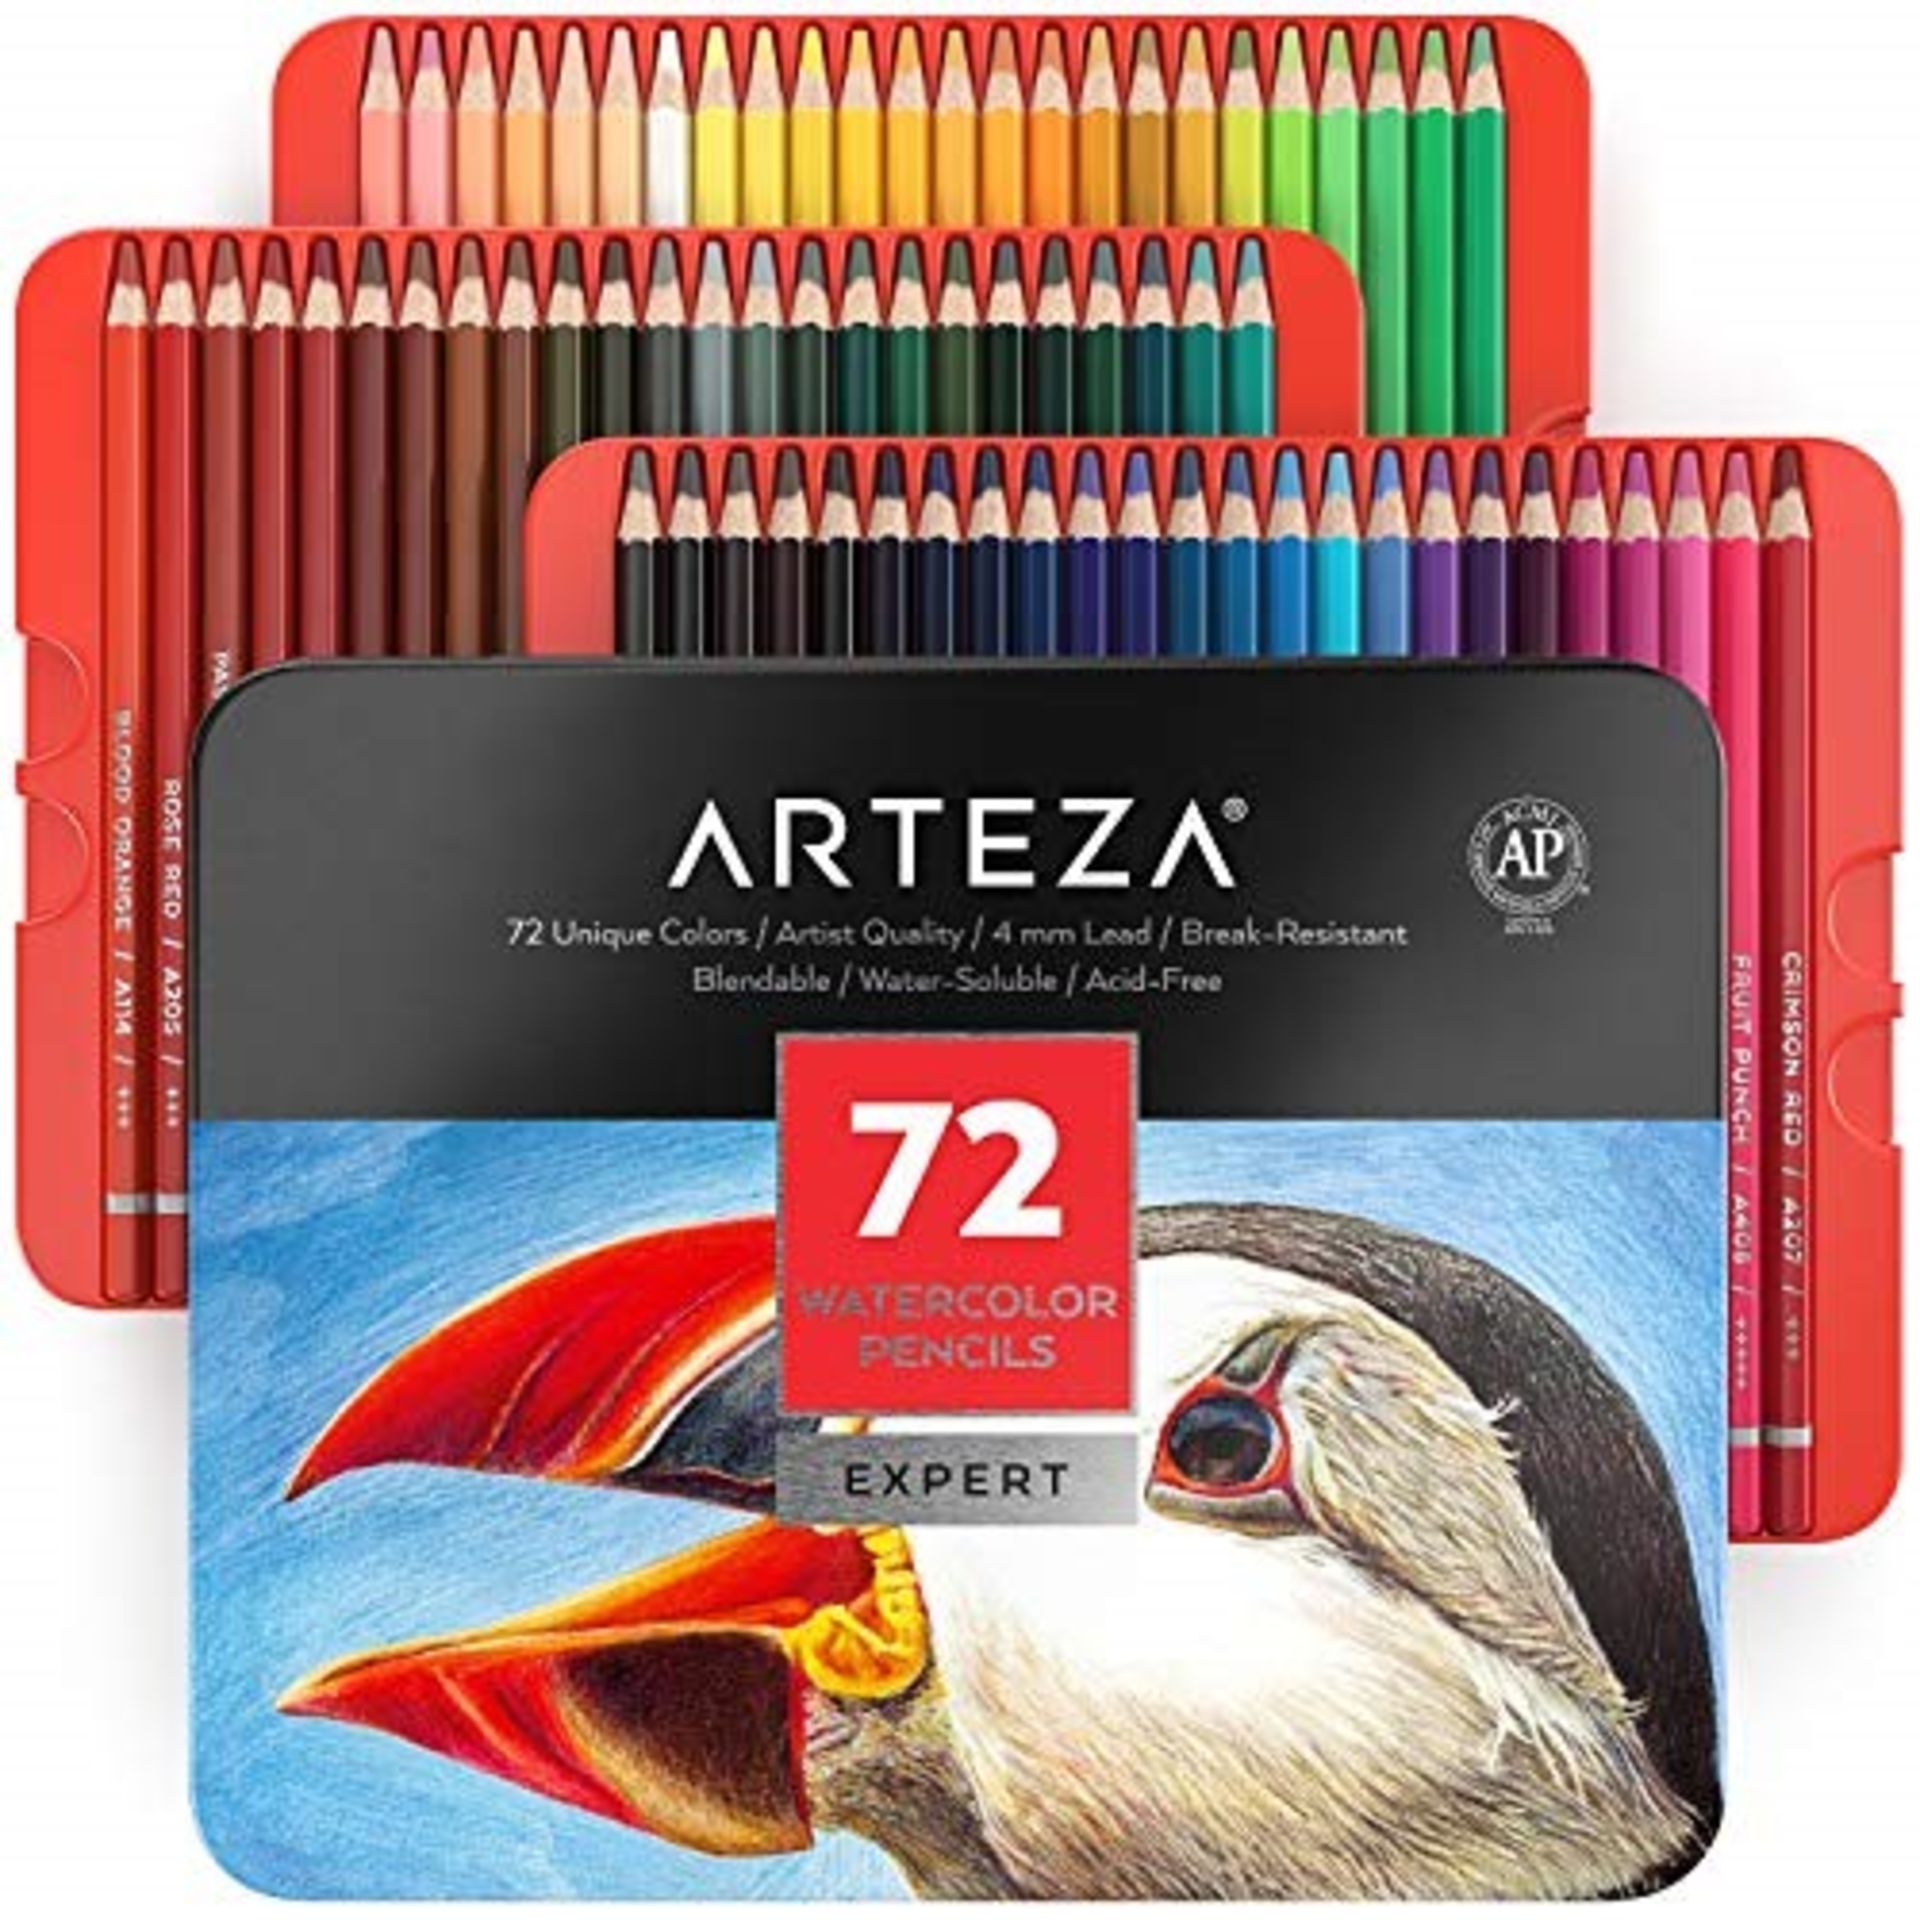 Arteza Professional Watercolour Pencils, Set of 72, Multi-Coloured Drawing Pencils for